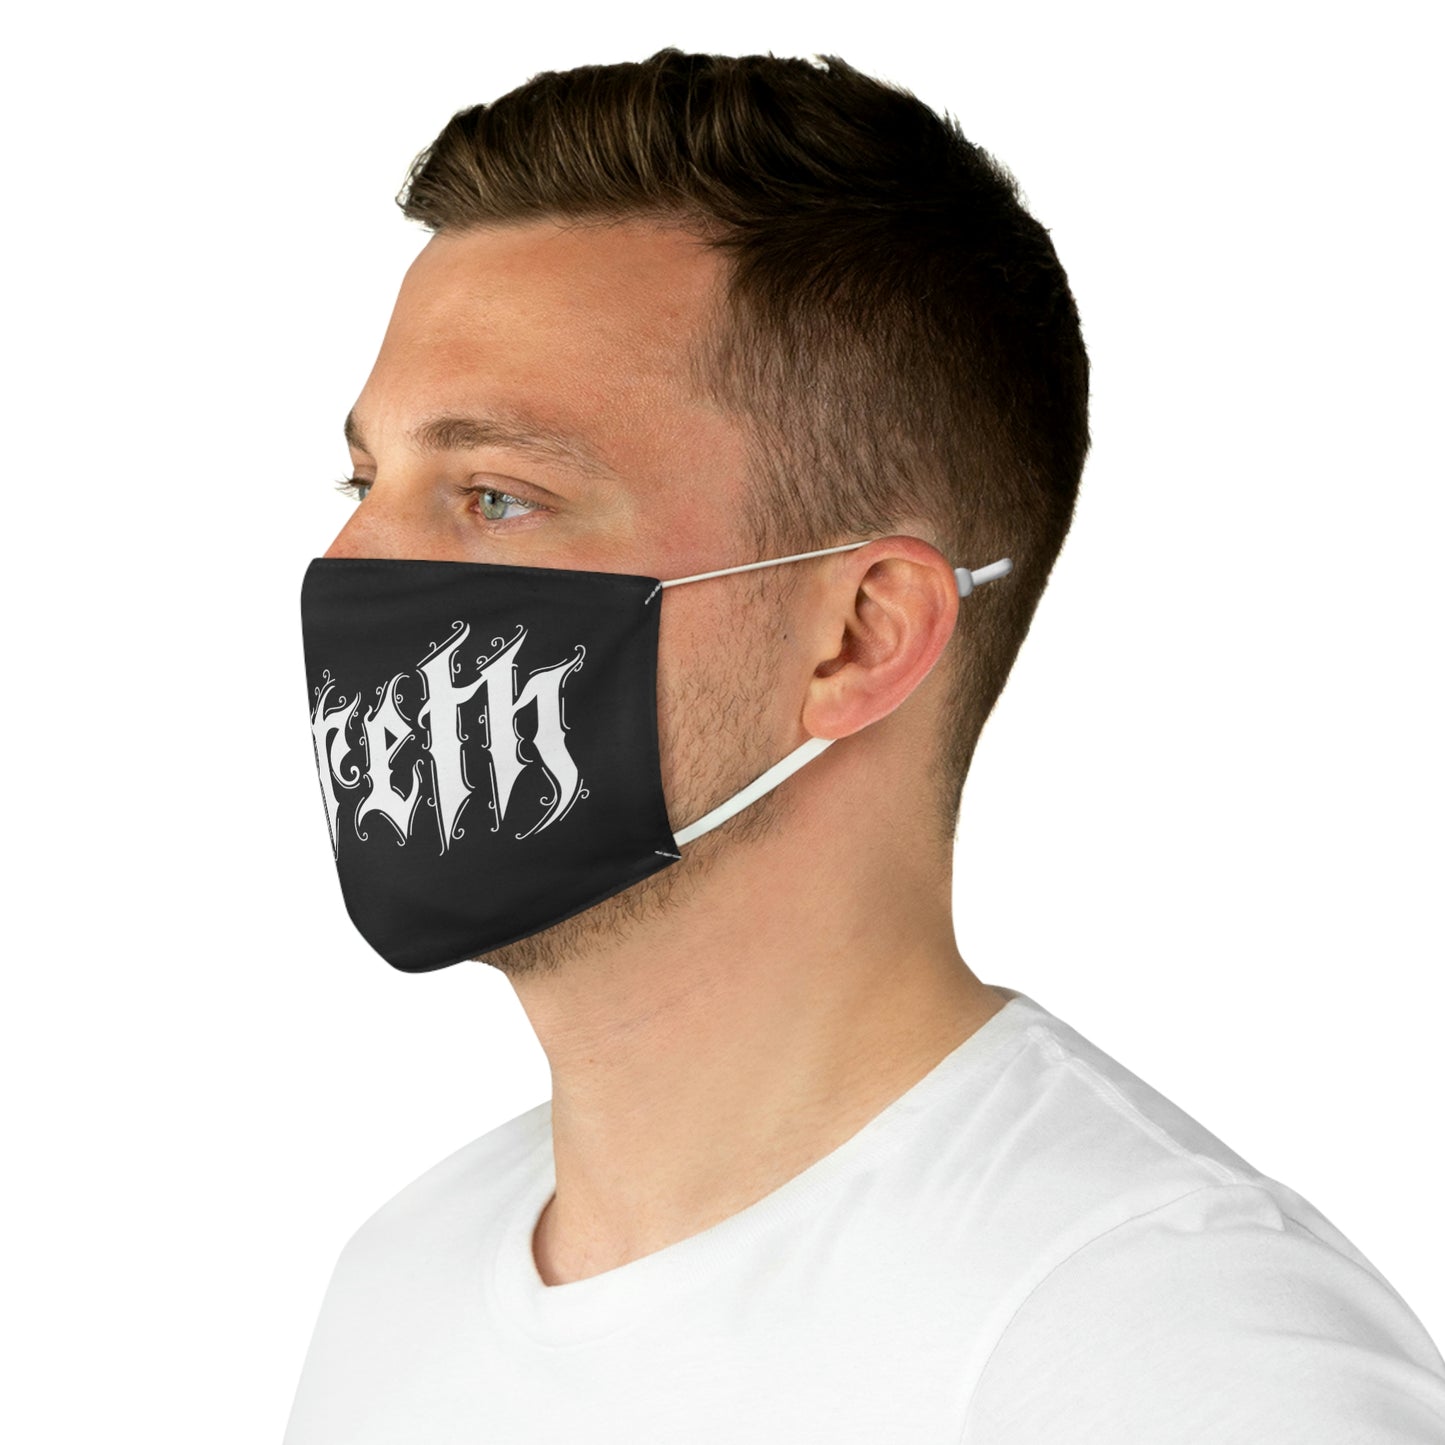 Sereth - (Black) Face Mask (Europe)